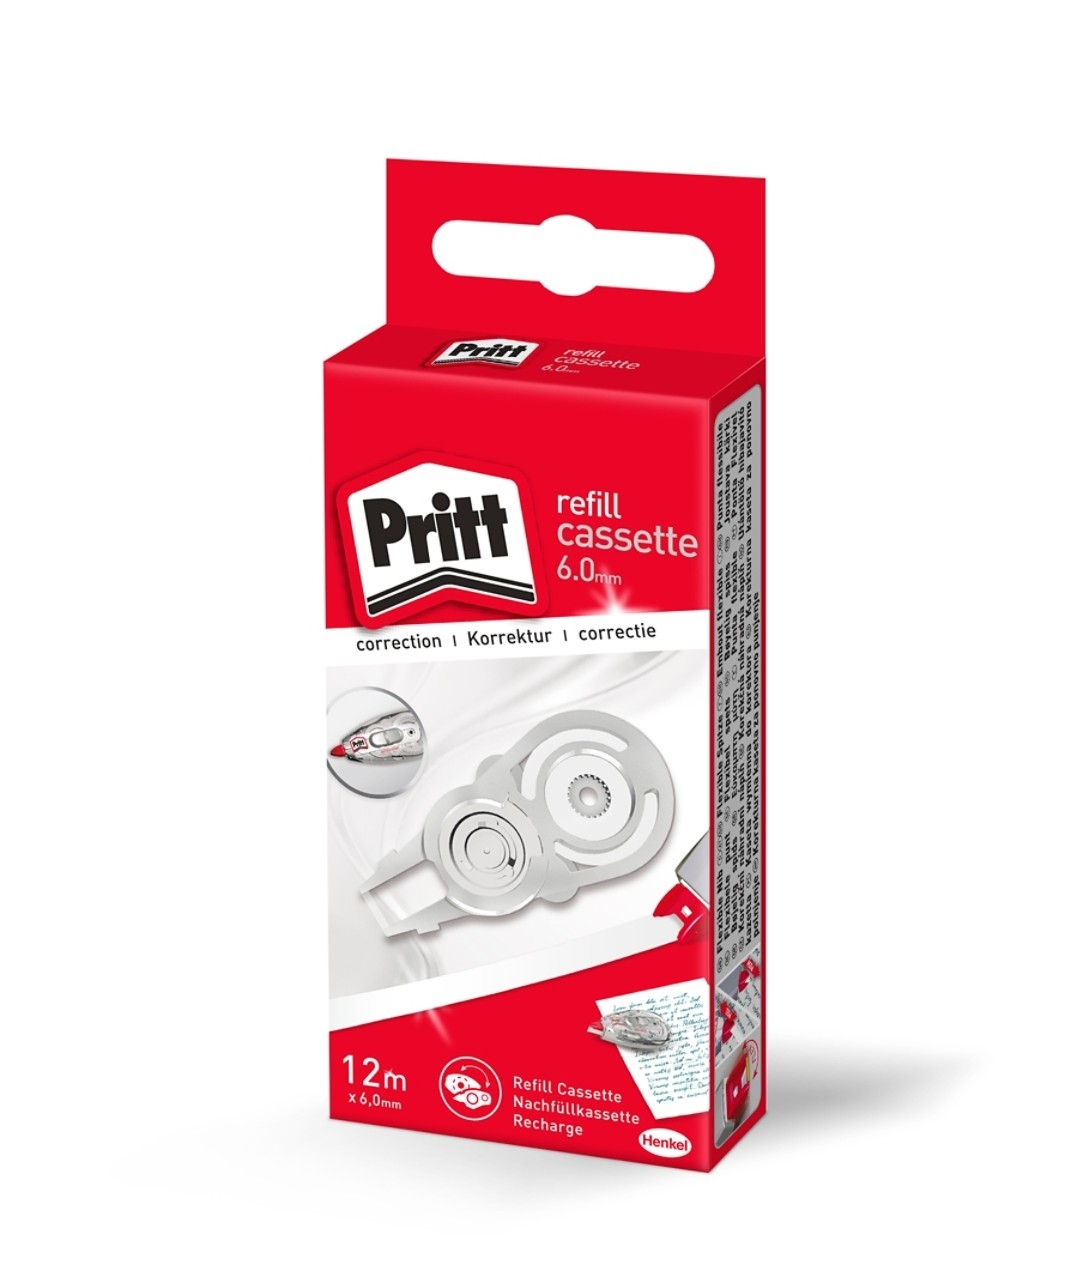 PRITT Cassette reill 6.0mmx12m PRX6H blanc, pour roller correcteur